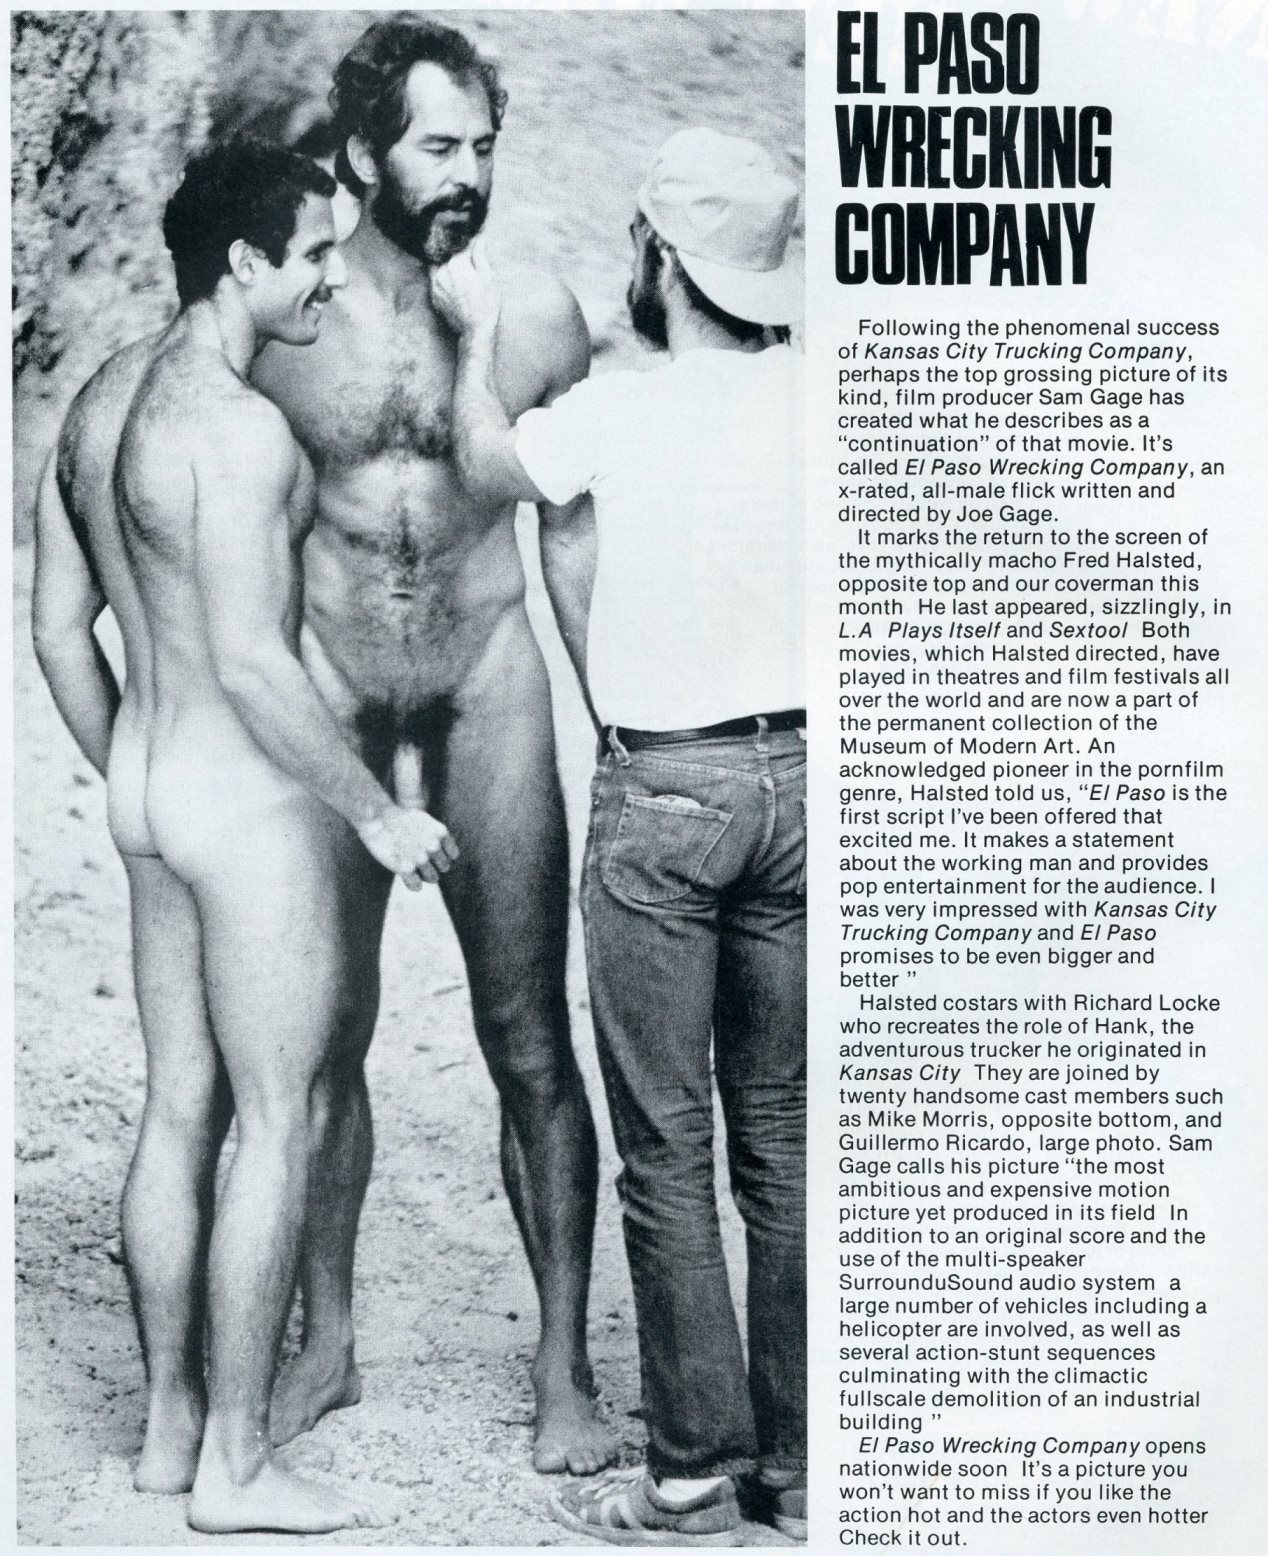 Dreamer Richard Locke Gay Porn - Richard Locke â€“ Page 2 â€“ bj's gay porno-crazed ramblings